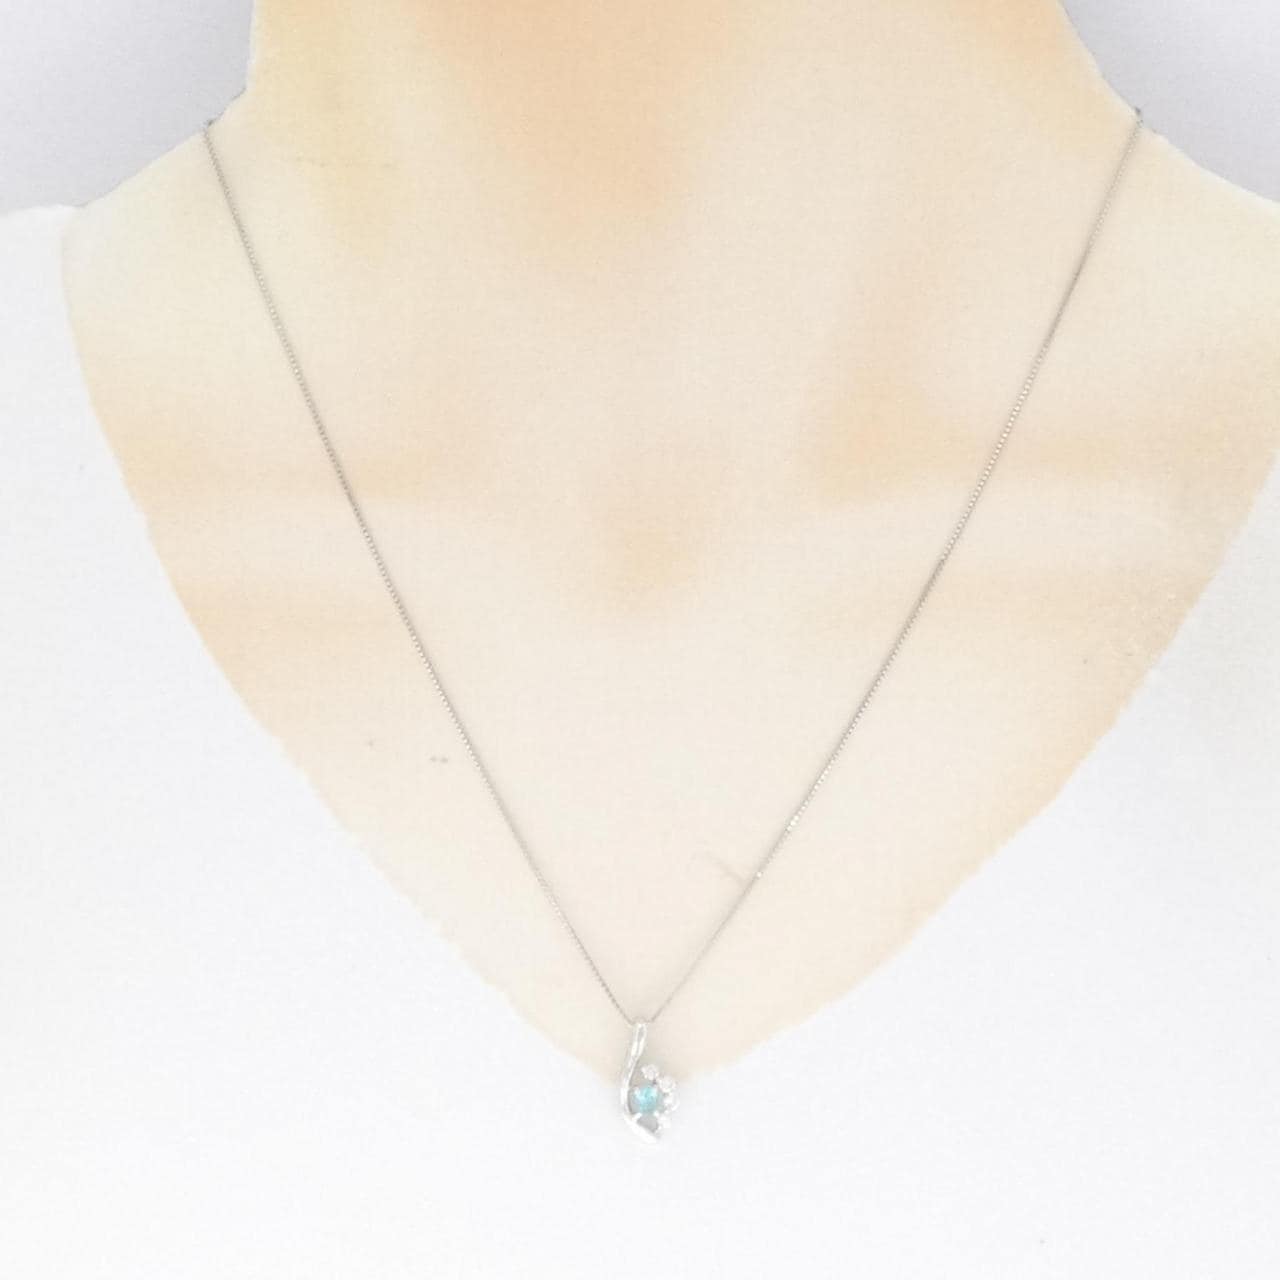 K18WG Paraiba Tourmaline necklace 0.15CT